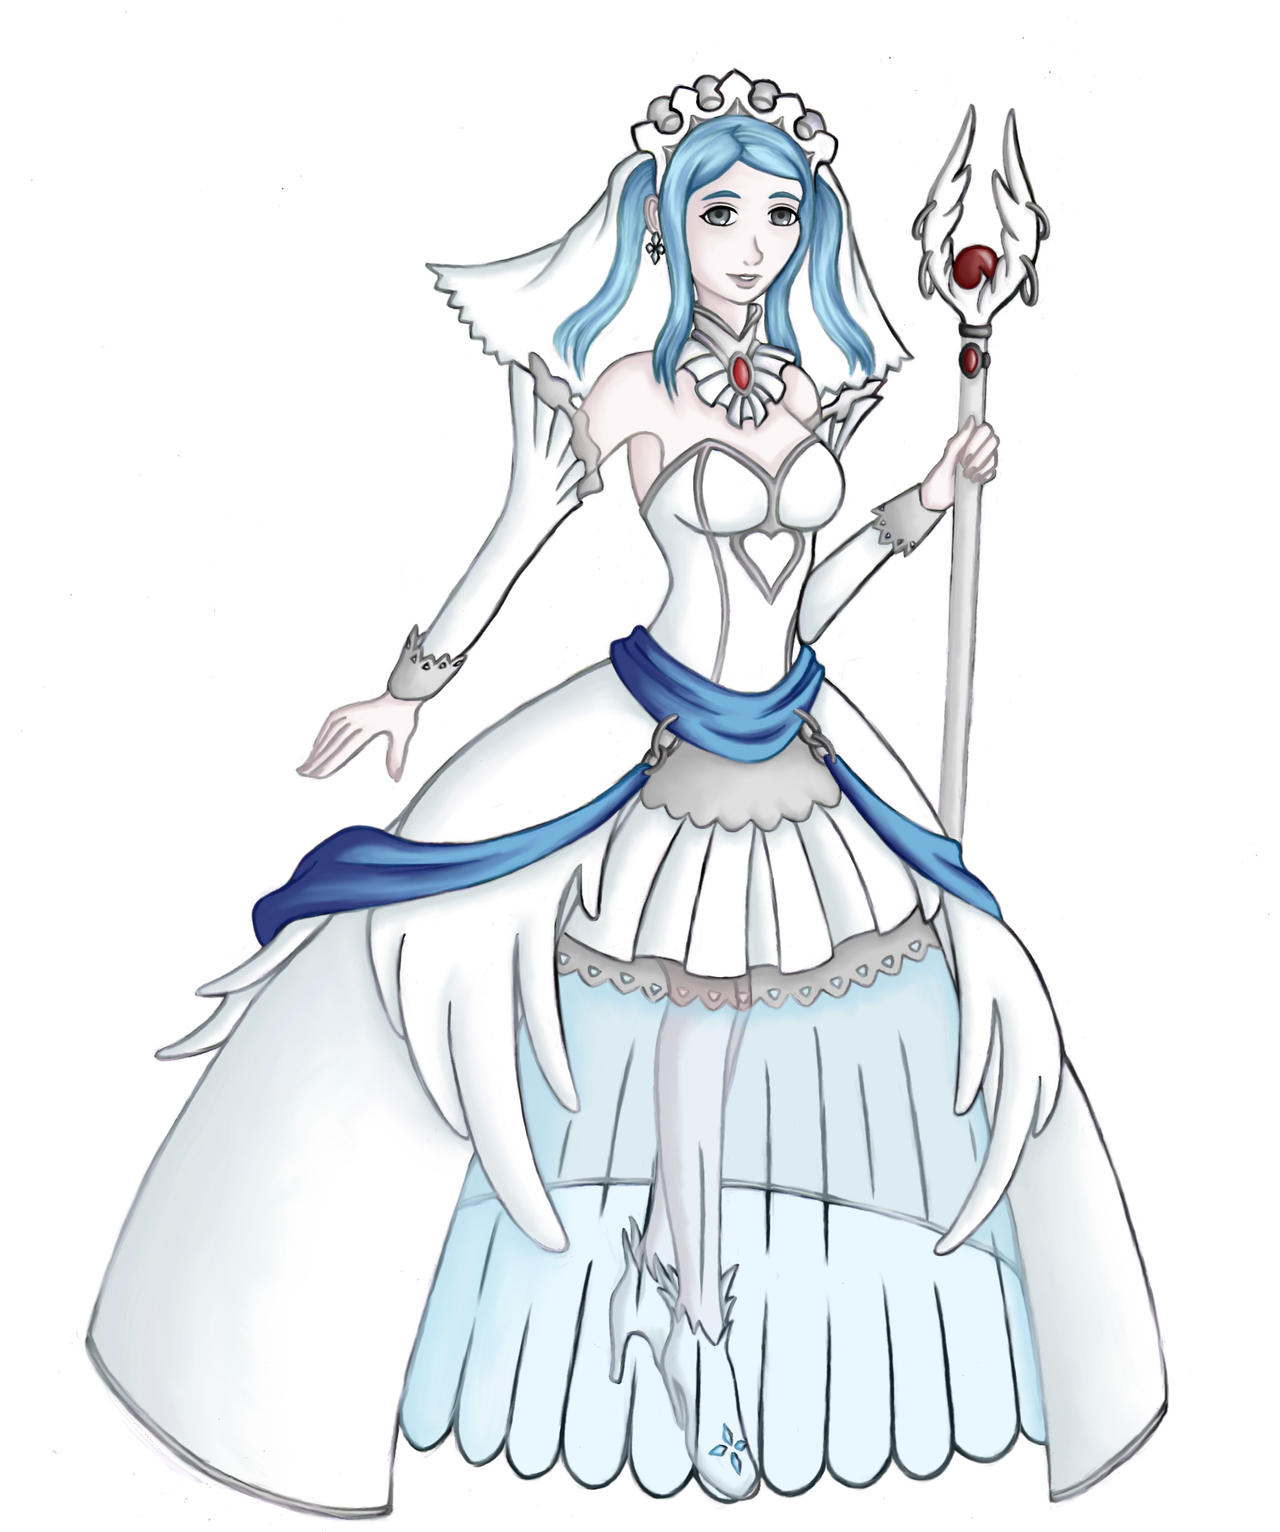 Fire Emblem Fates OC: Hedwig by Animefreak0055 on DeviantArt